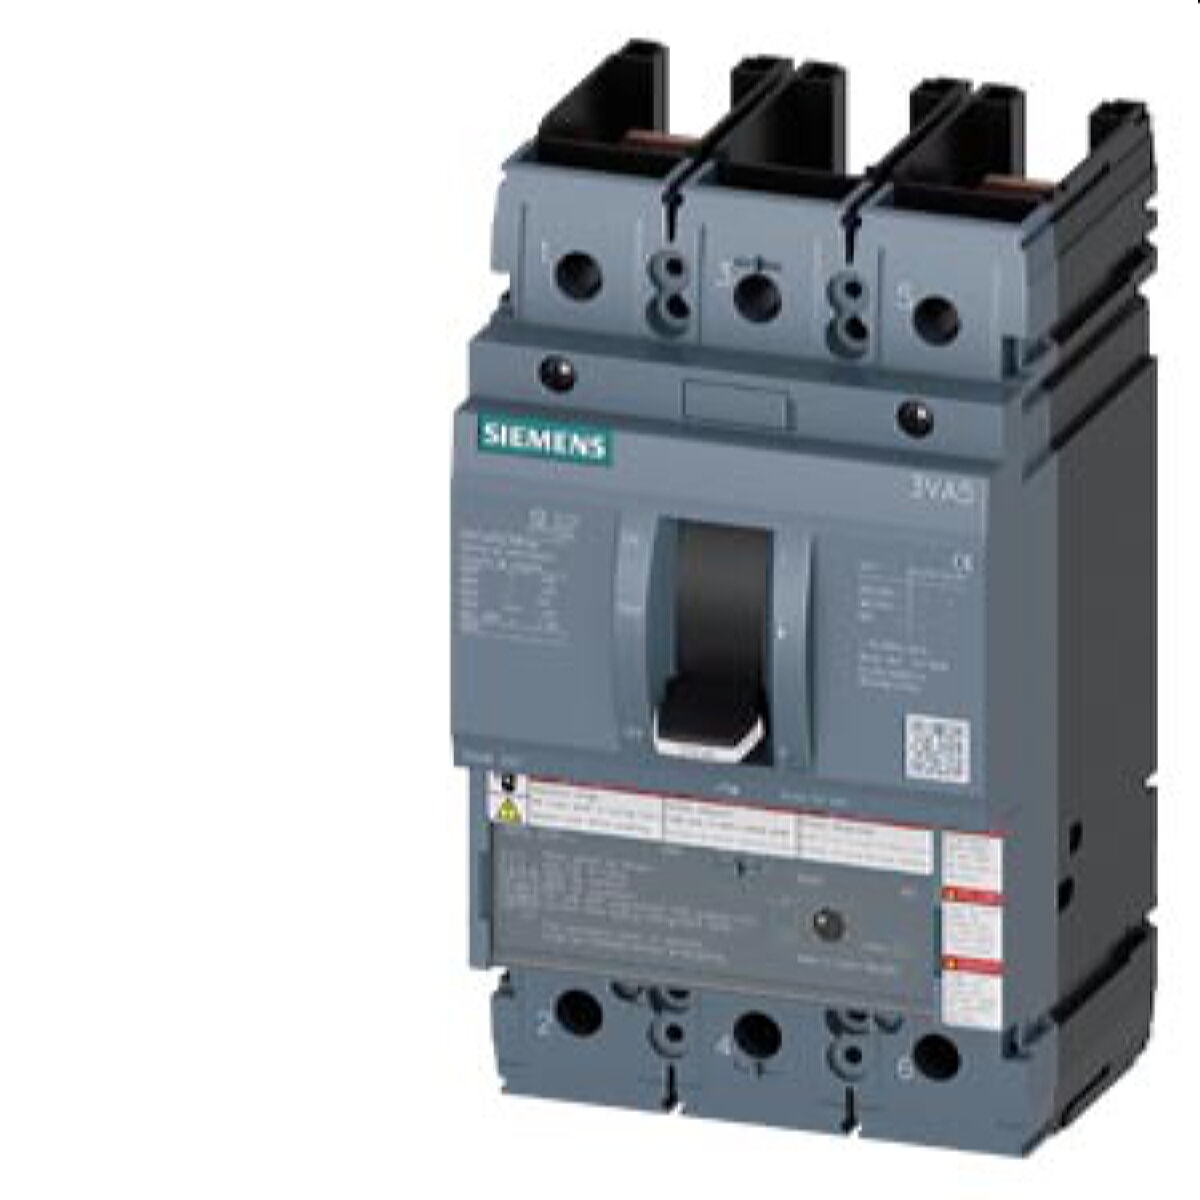 Siemens Leistungsschalter 3VA5 100kA TM230 100A 2polig 3VA5210-7EC61-0AA0